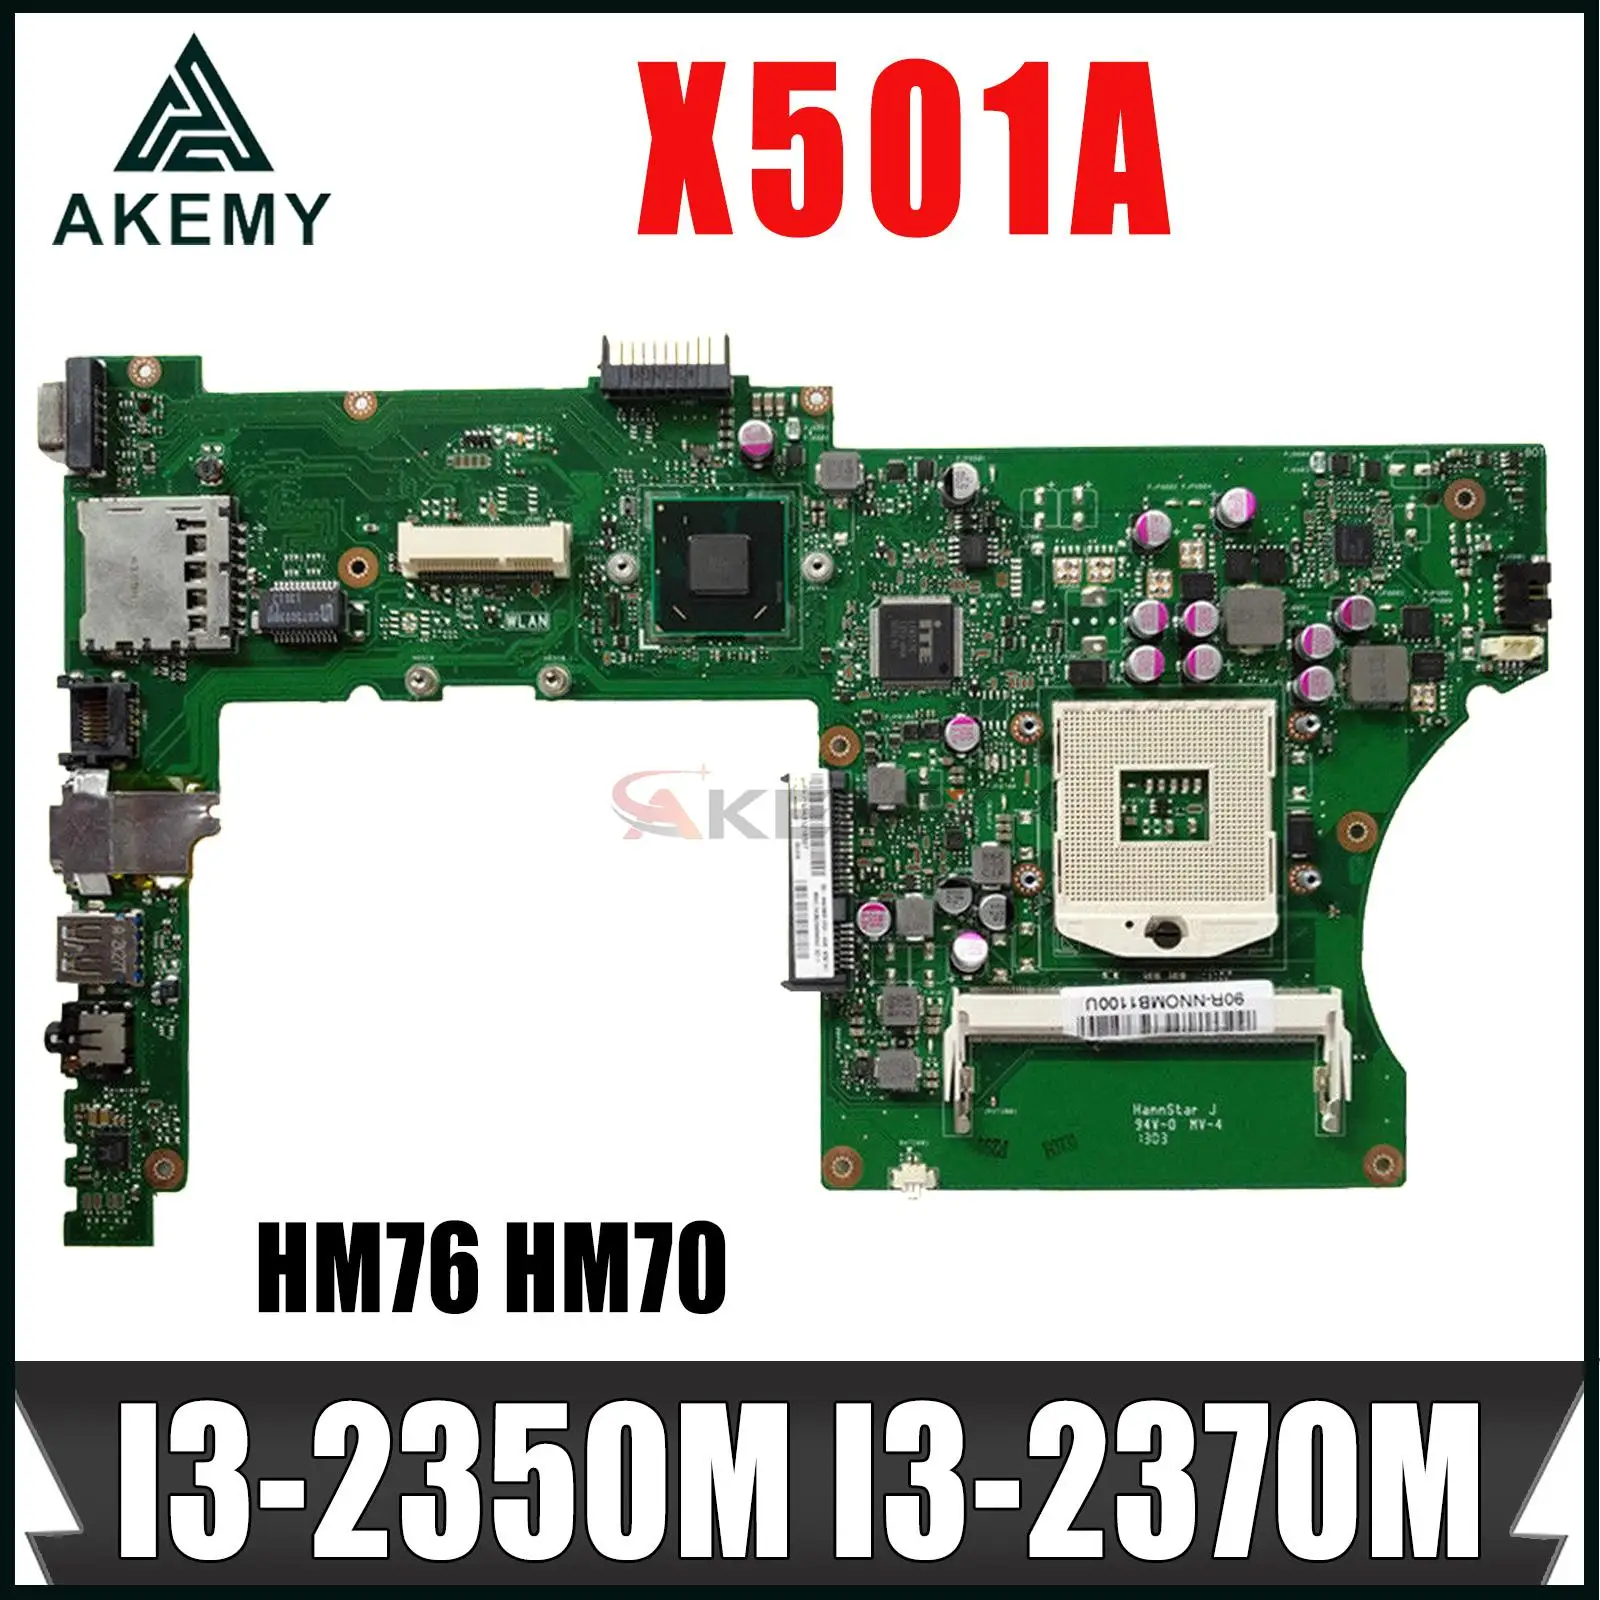 

X401A Motherboard For ASUS X301A X401A X501A F401A SLJ8E HM76 Support I3 I5 I3-2350M I3-2370M CPU DDR3 100% Test OK